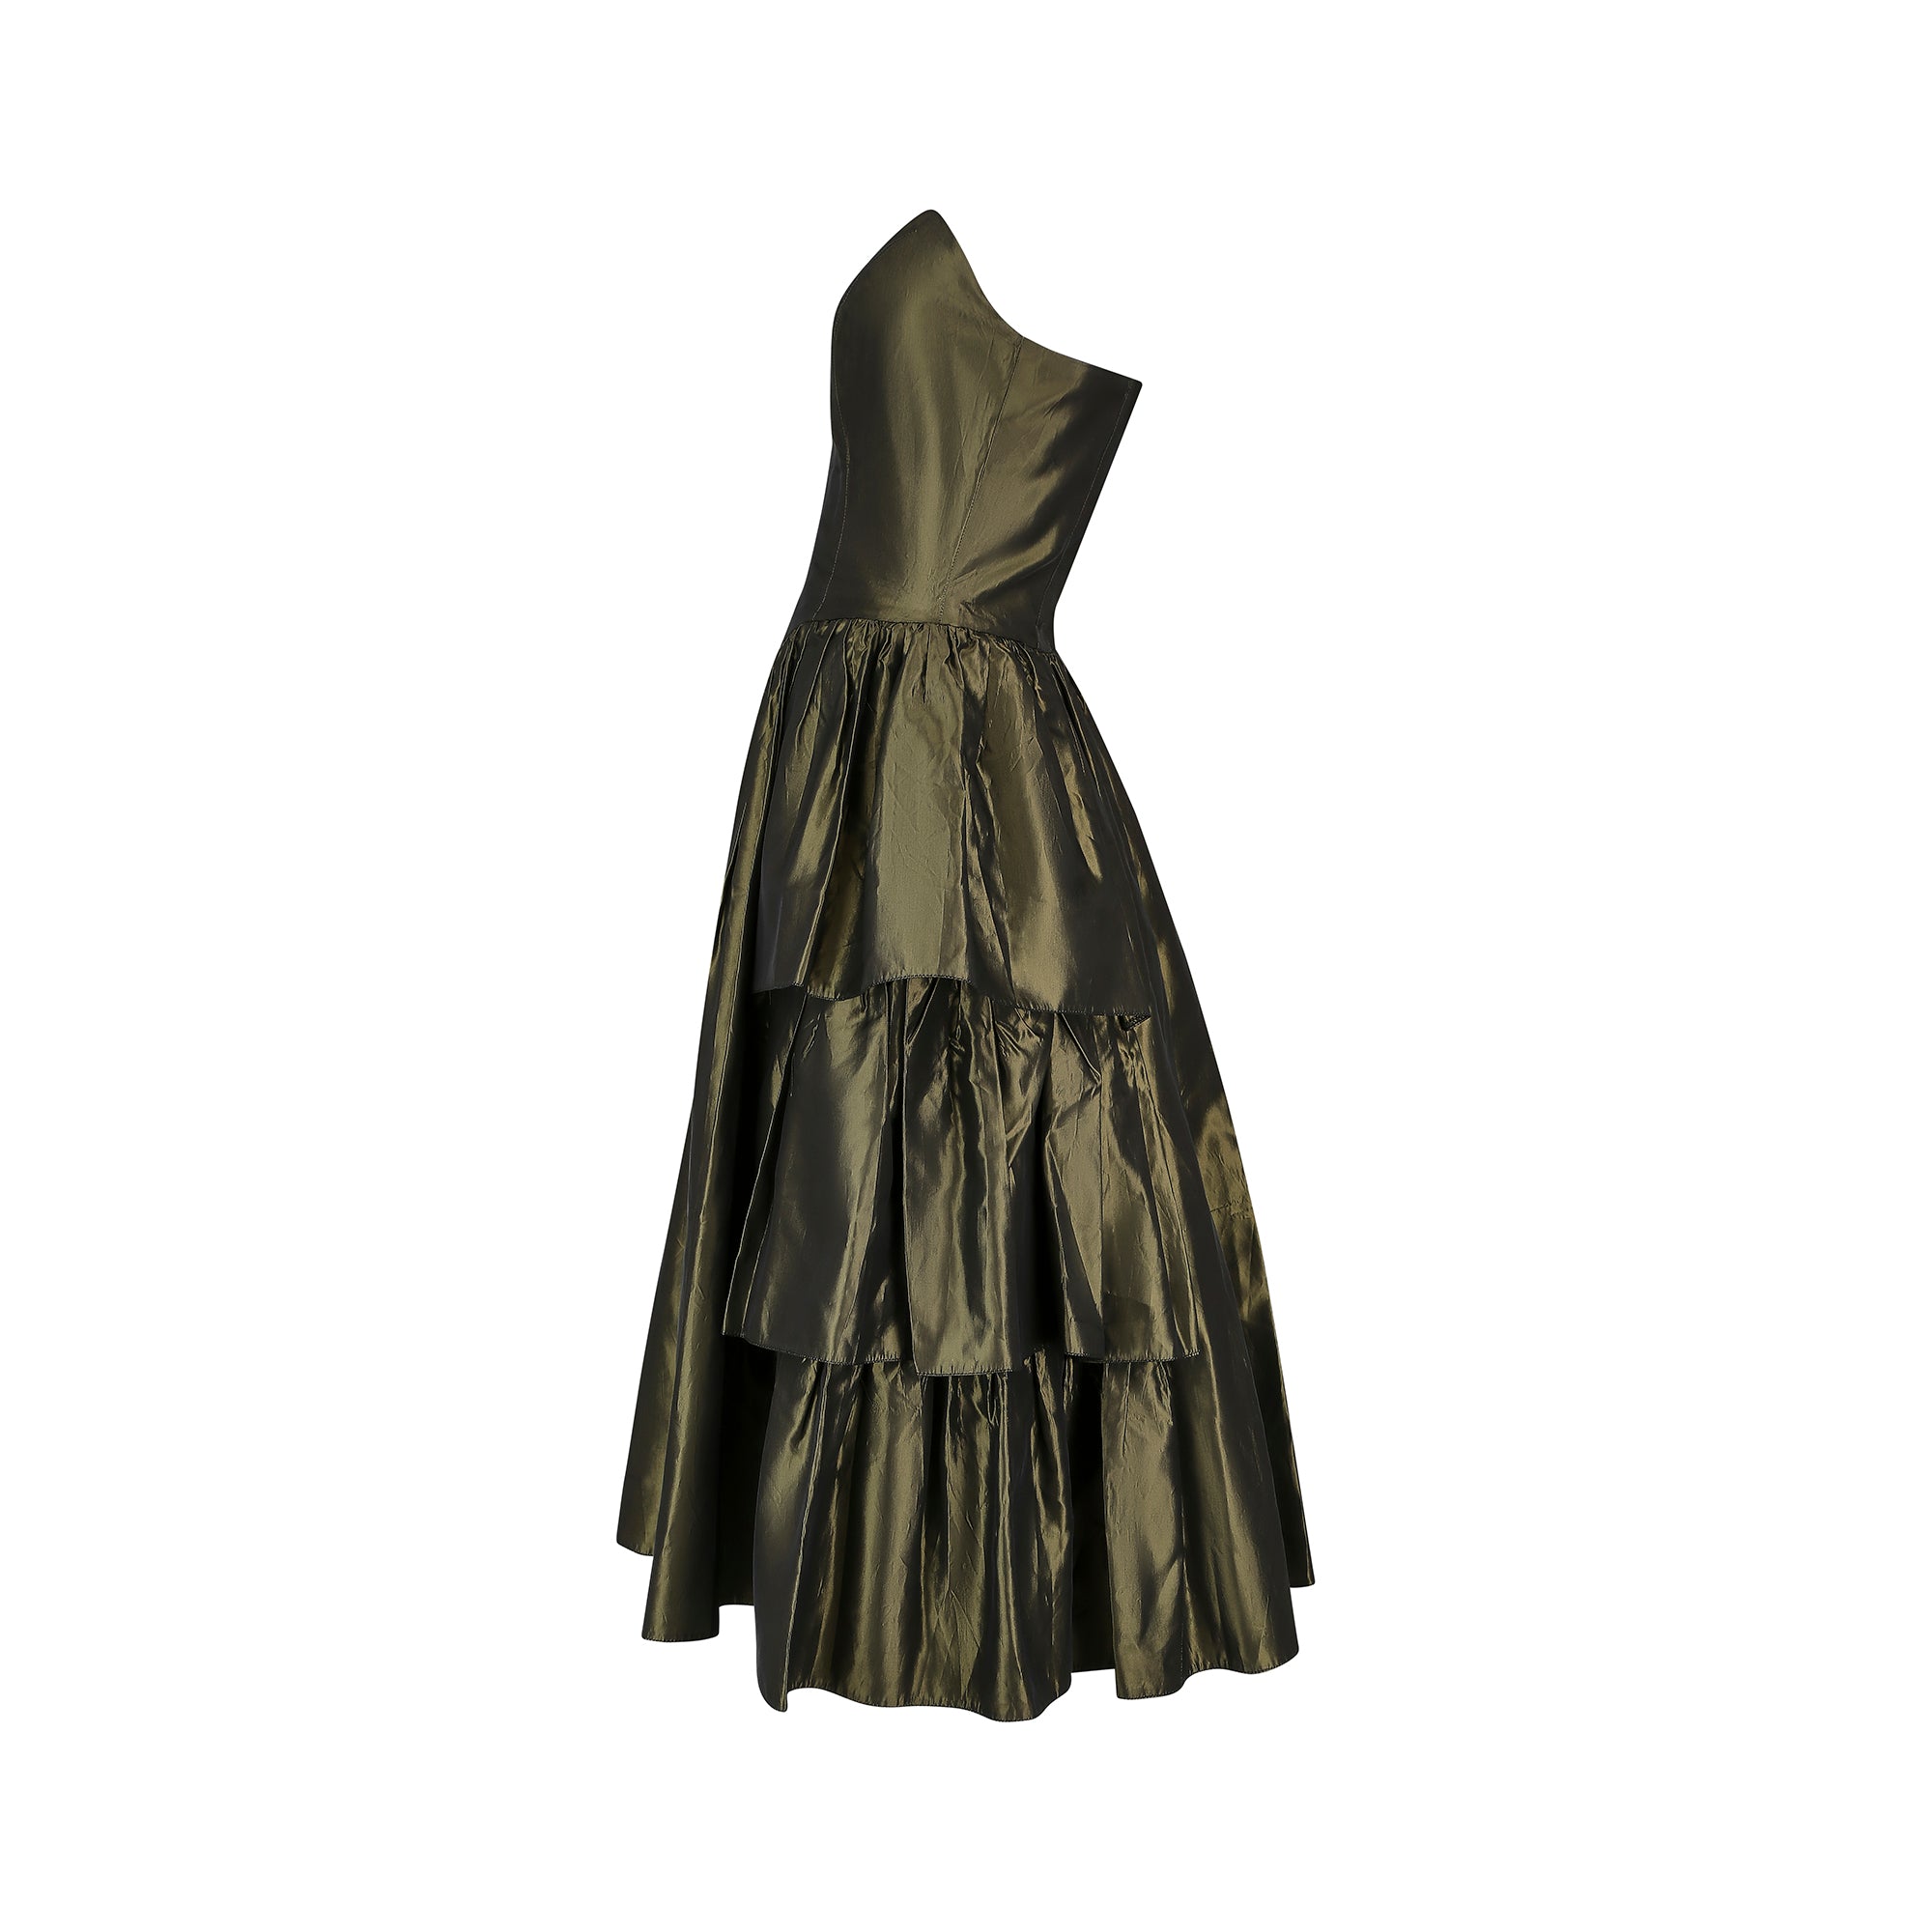 ARCHIVE - 1980s Katerina Strapless Olive Green Taffeta Dress